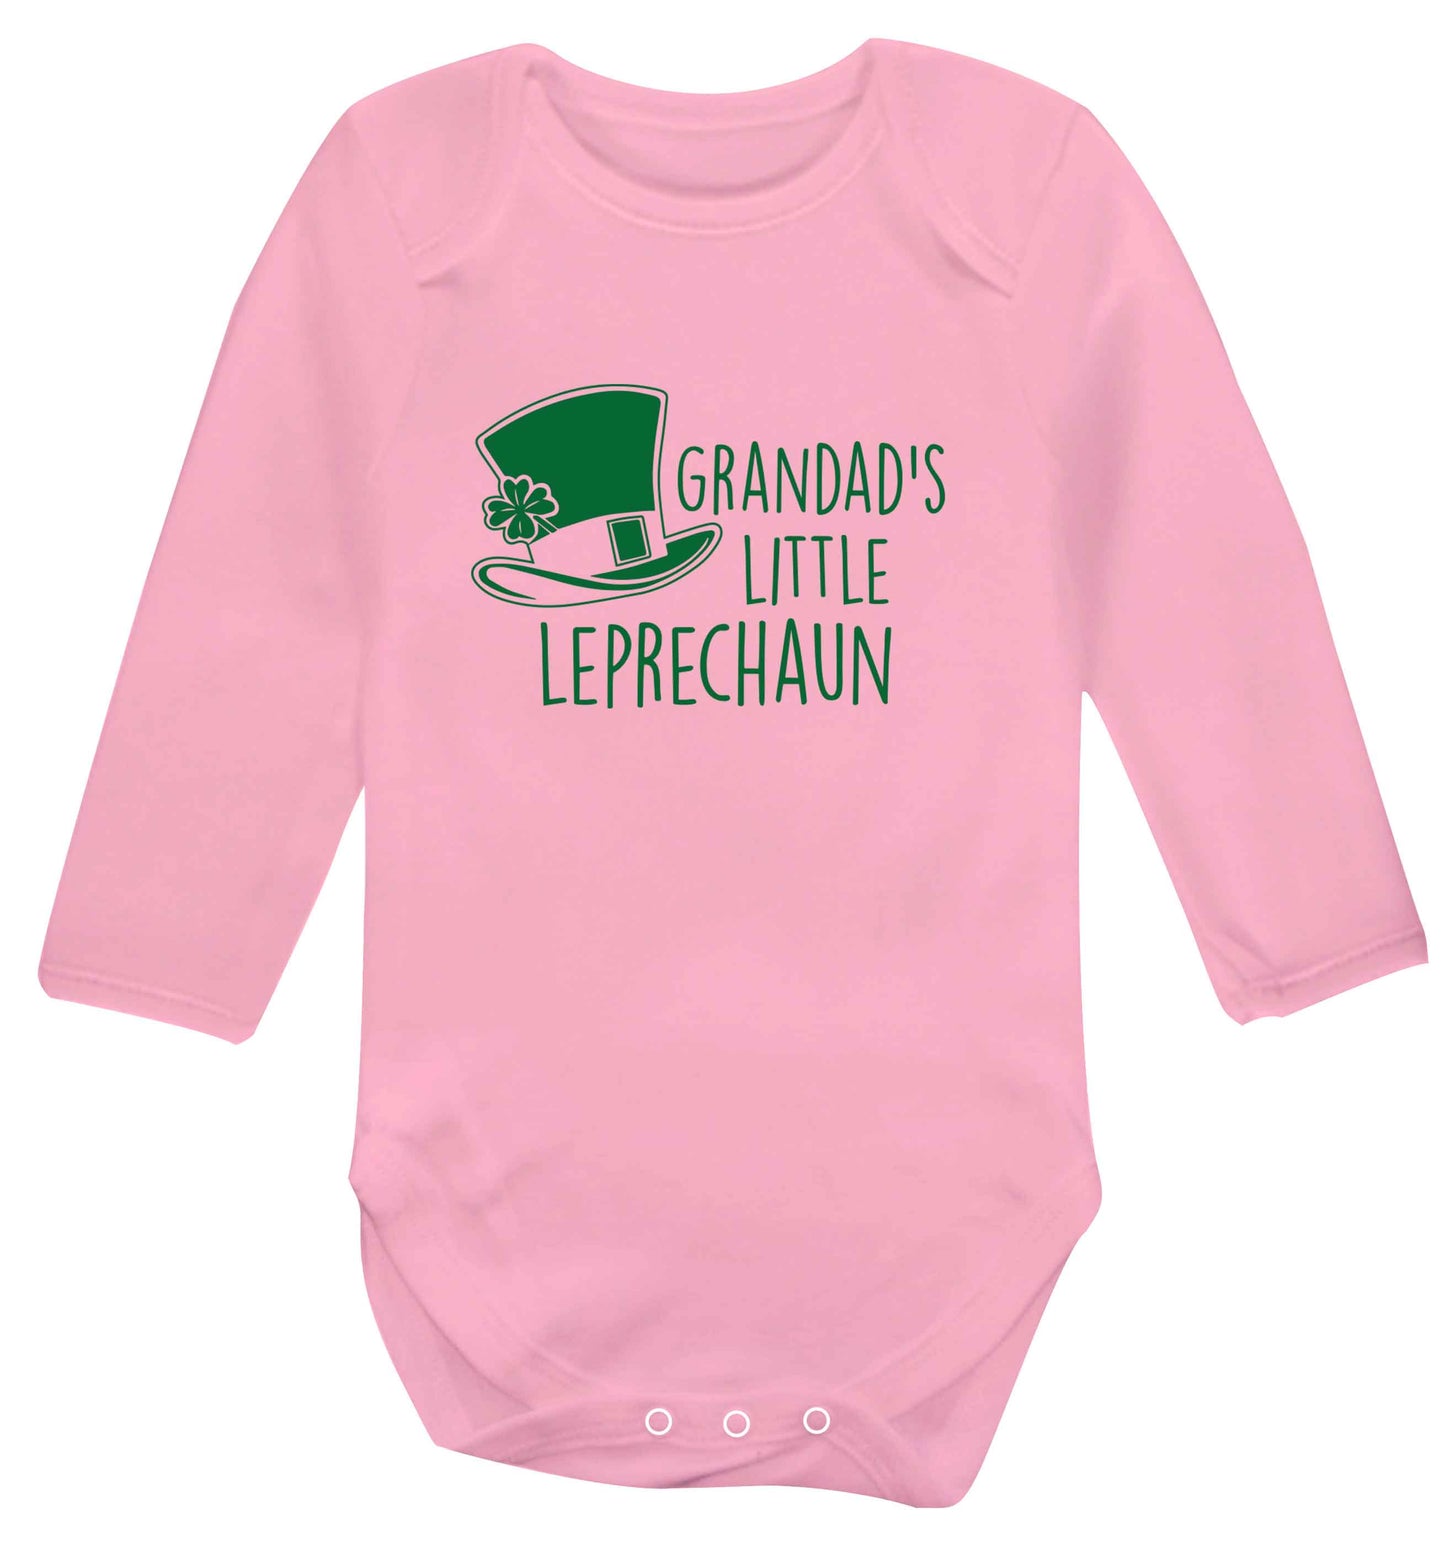 Grandad's little leprechaun baby vest long sleeved pale pink 6-12 months